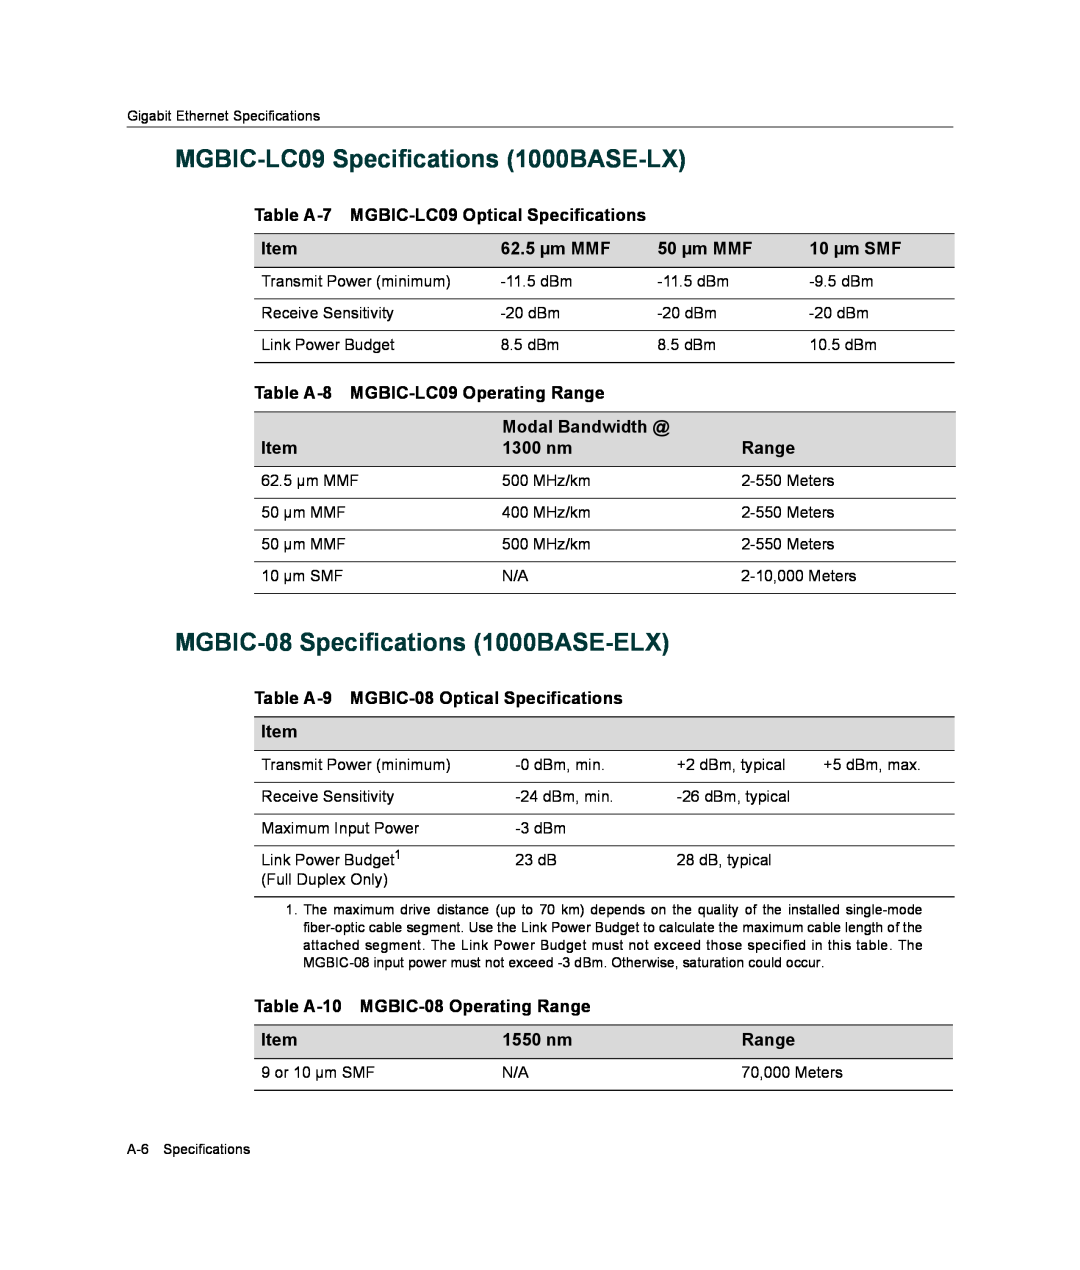 Enterasys Networks B2G124-24 manual MGBIC-LC09 Specifications 1000BASE-LX, MGBIC-08 Specifications 1000BASE-ELX 